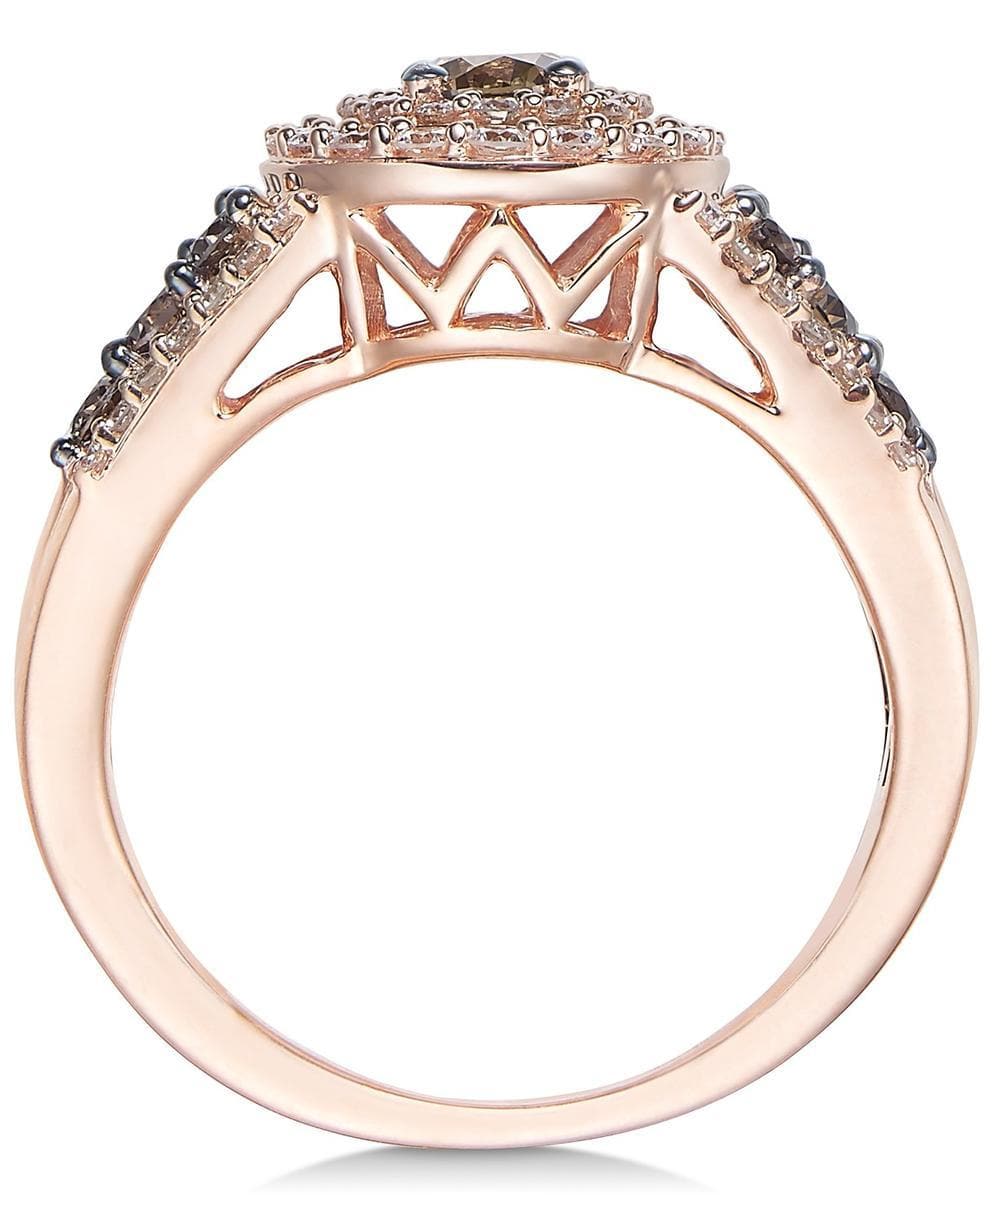 Le Vian Chocolate Diamonds 14k Rose Gold Ring 